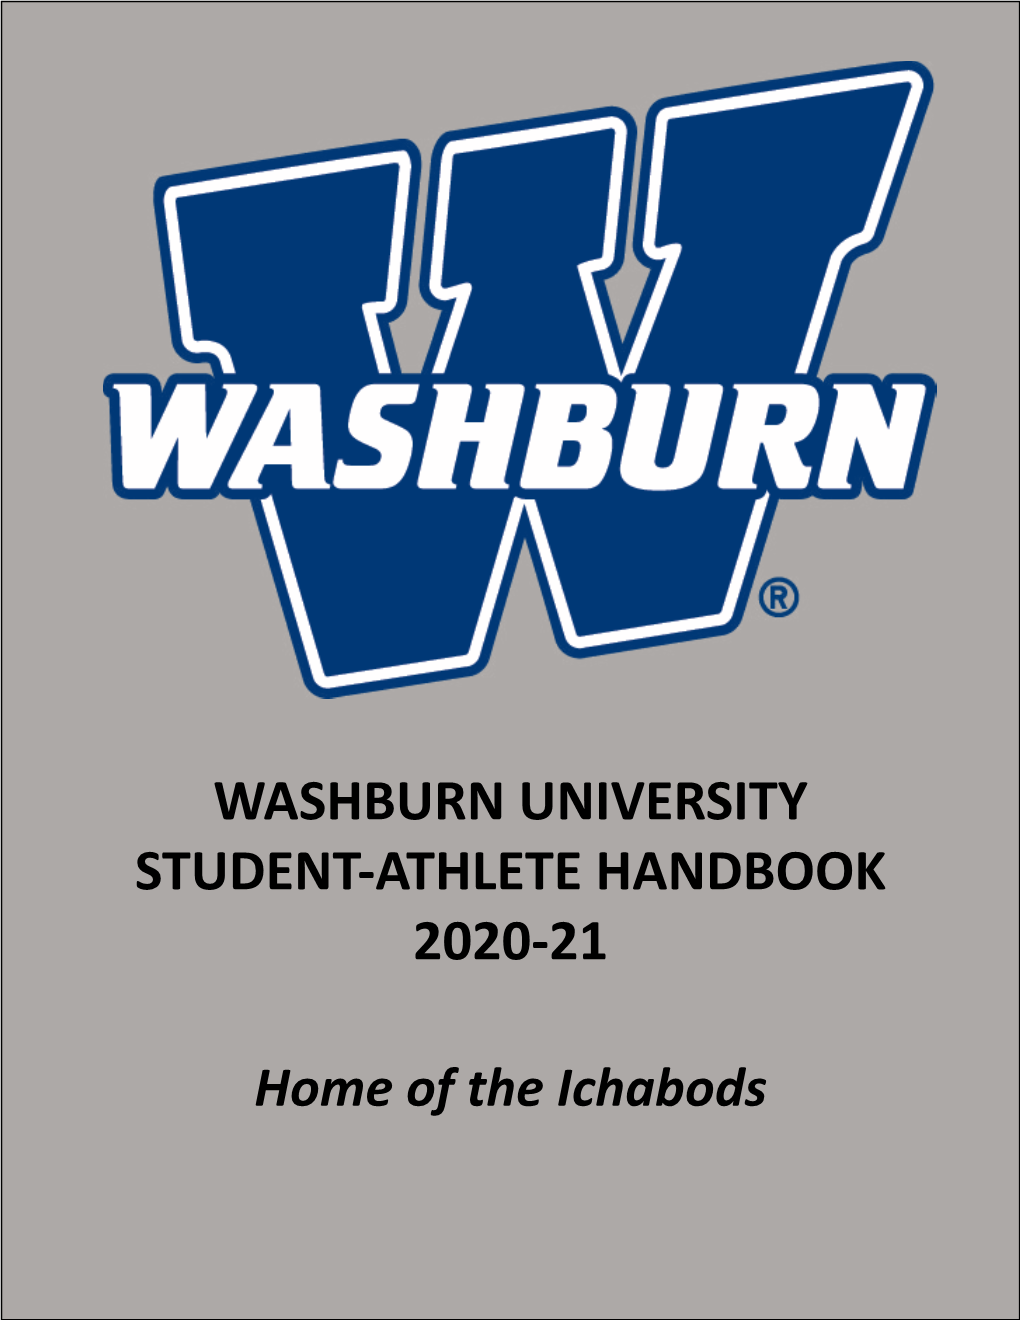 Washburn University Student-Athlete Handbook 2020-21